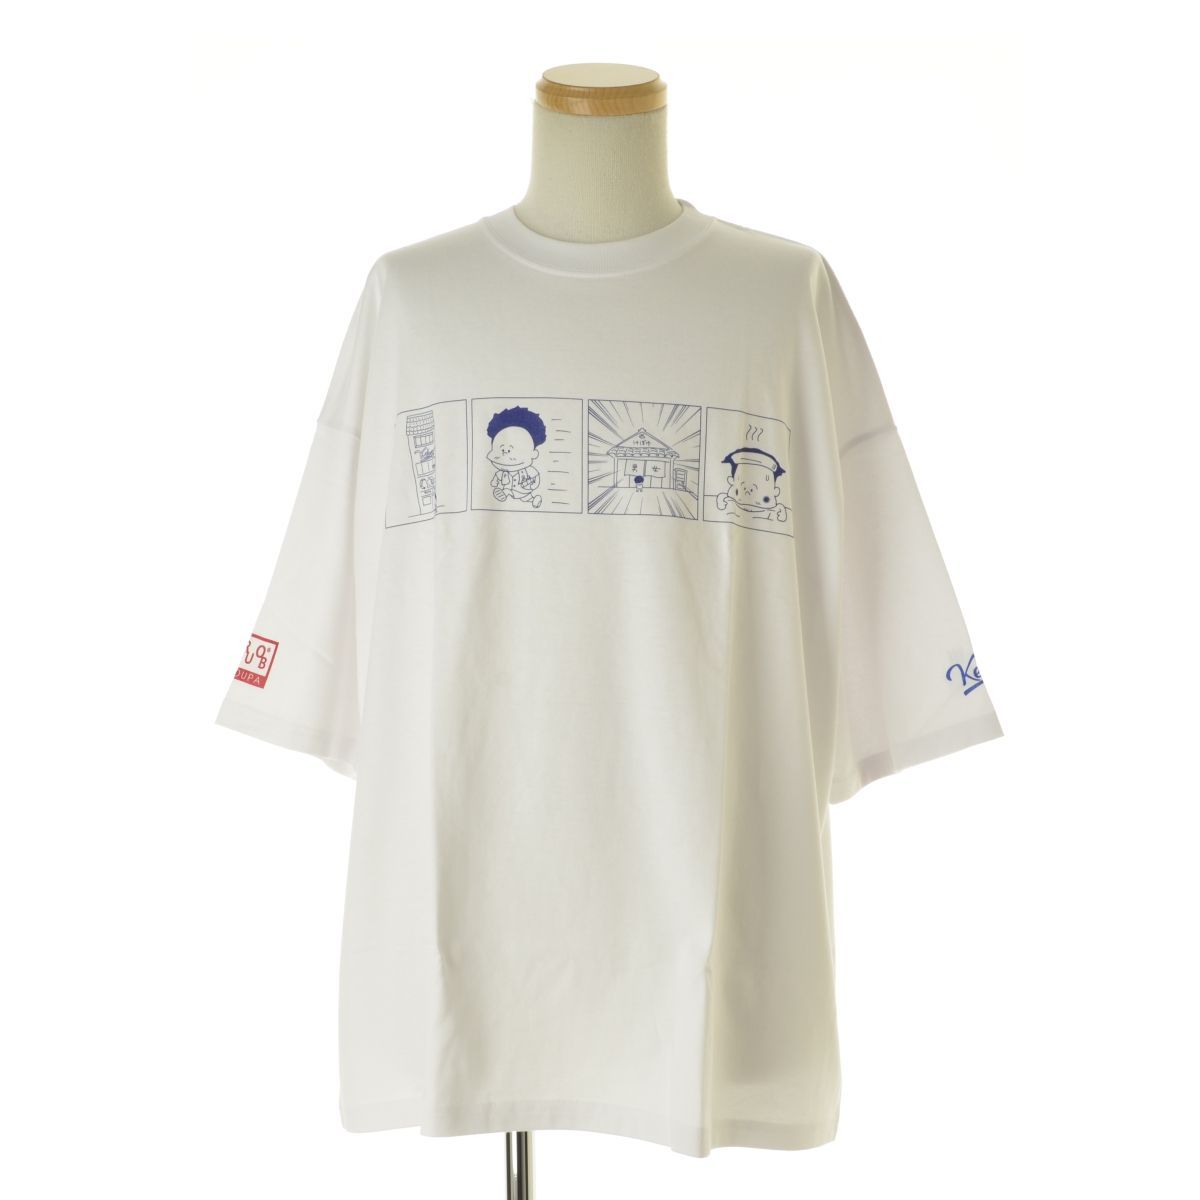 KEBOZ×FROCLUB】4M S/S TEE半袖Tシャツ - ブランド古着のカンフル ...